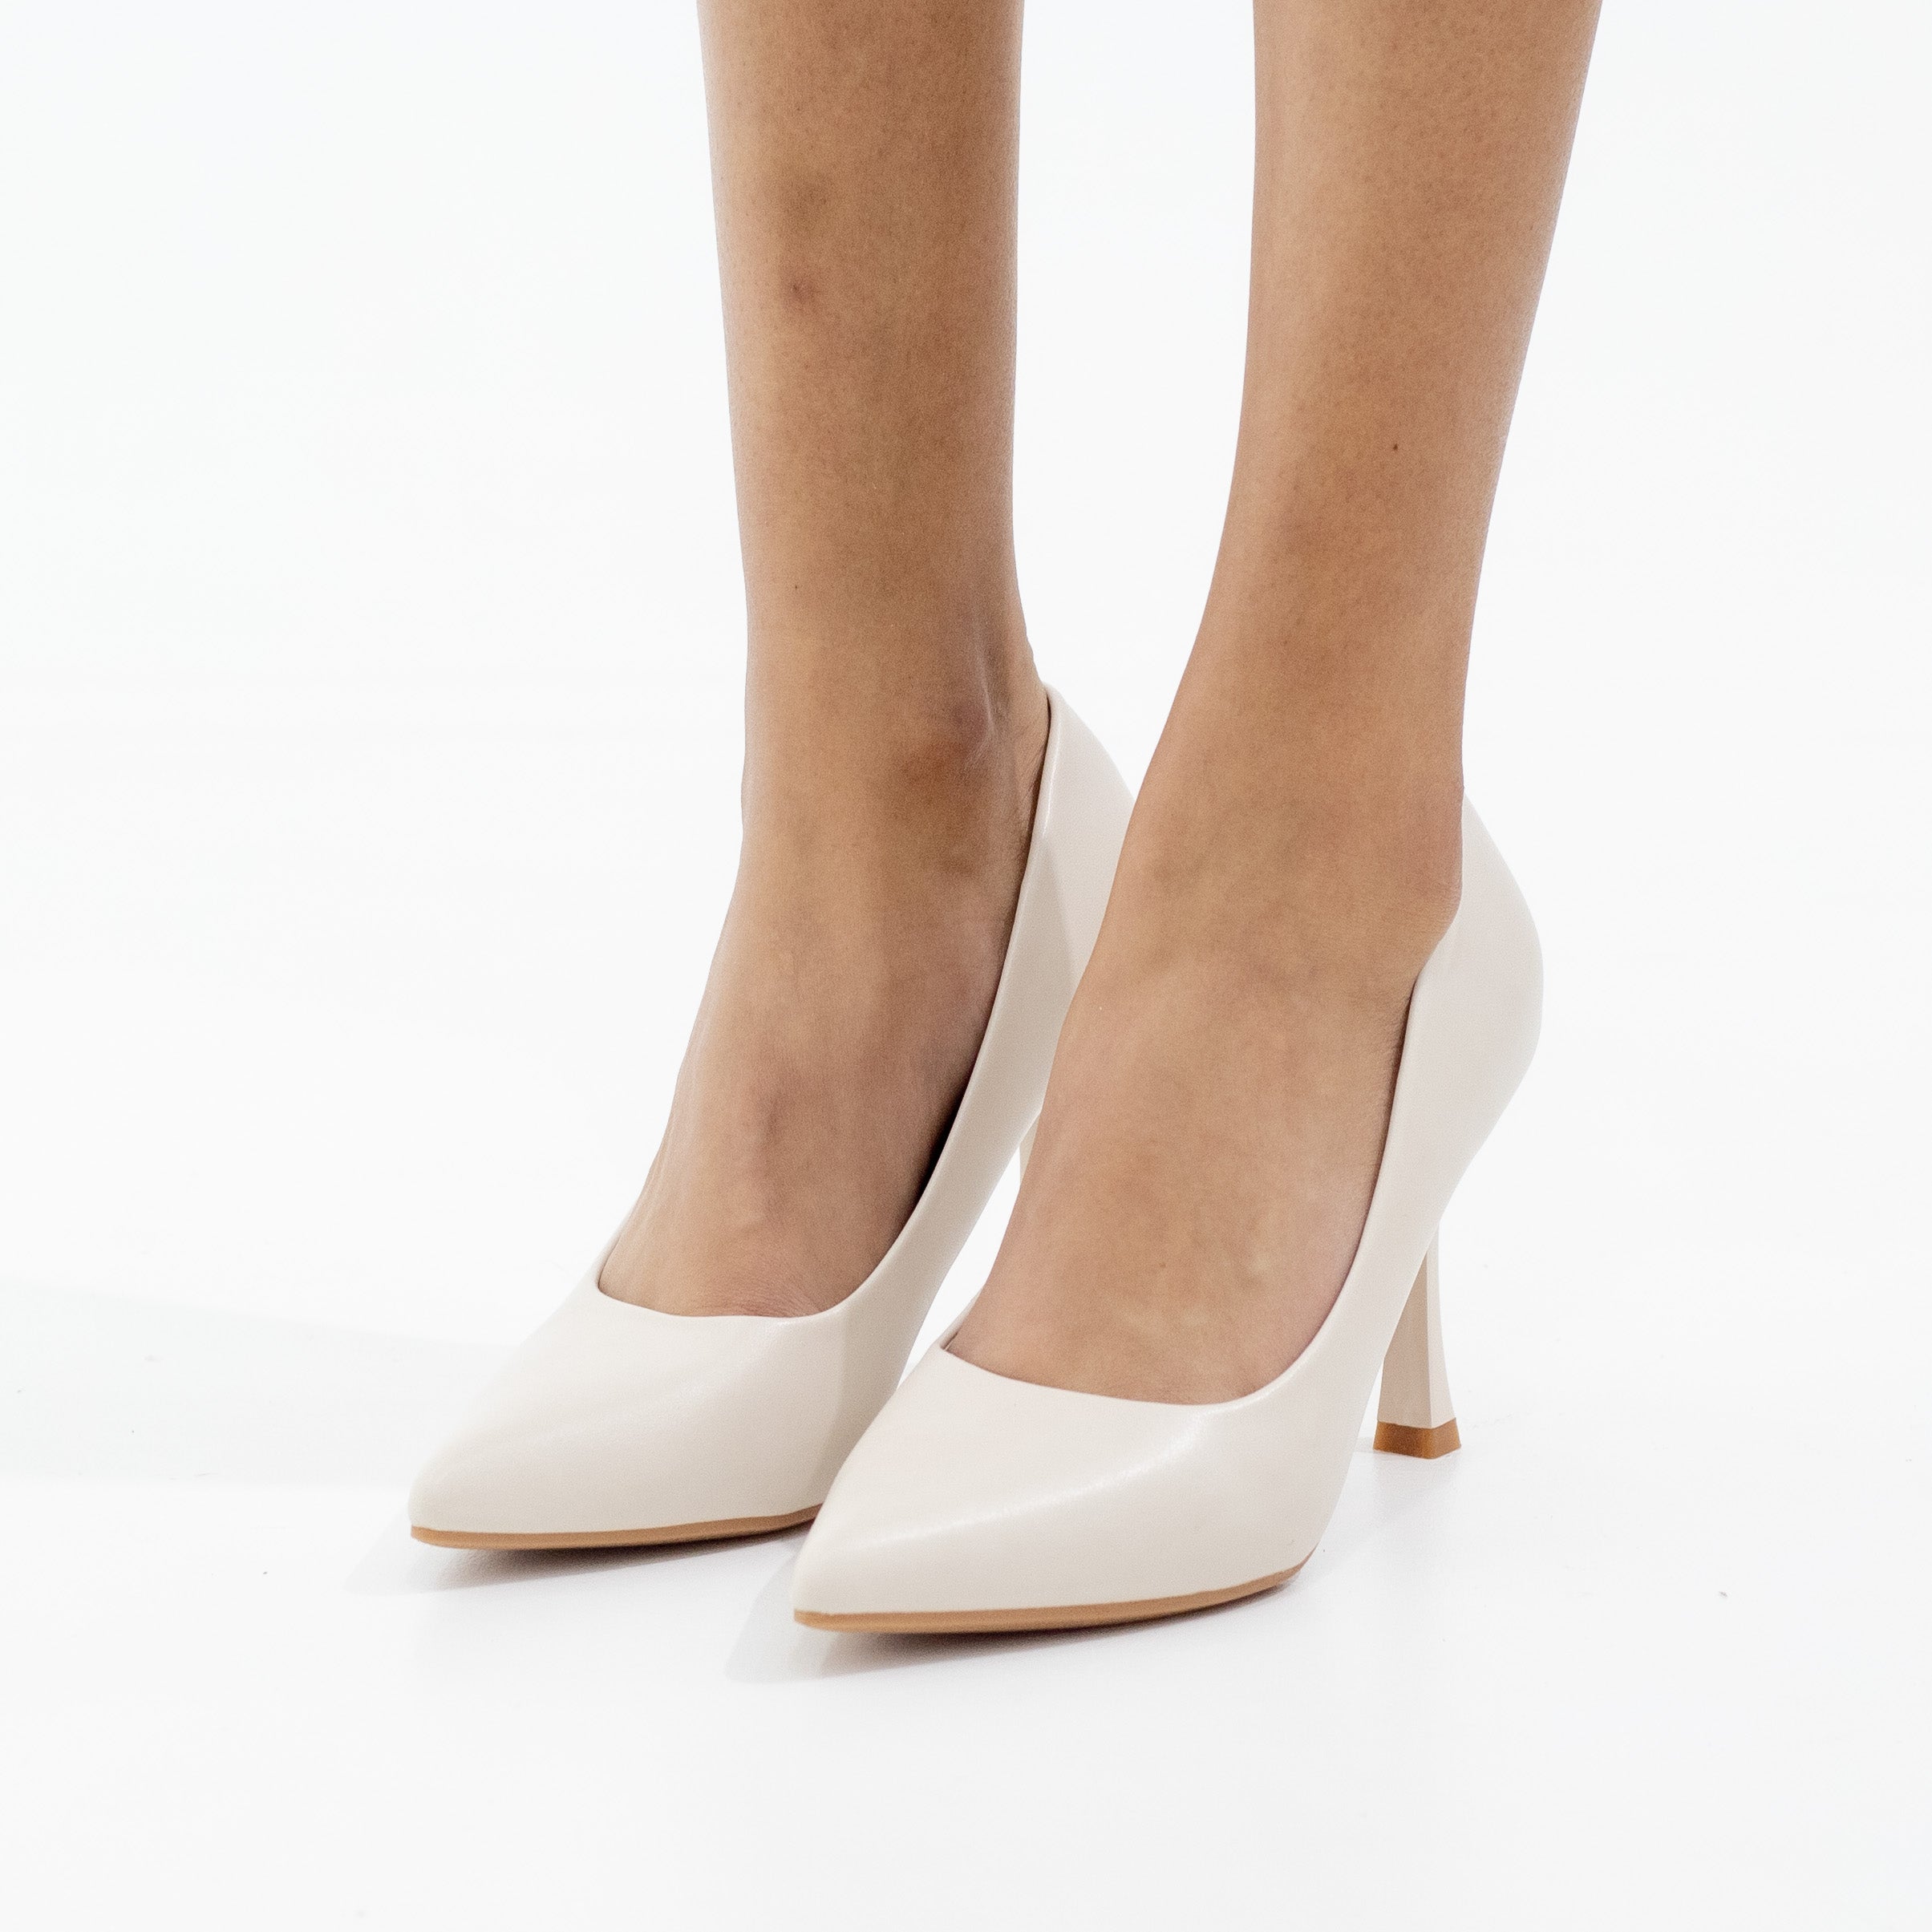 Off-white 9.5cm heel KJ1701 pointy court PU italia